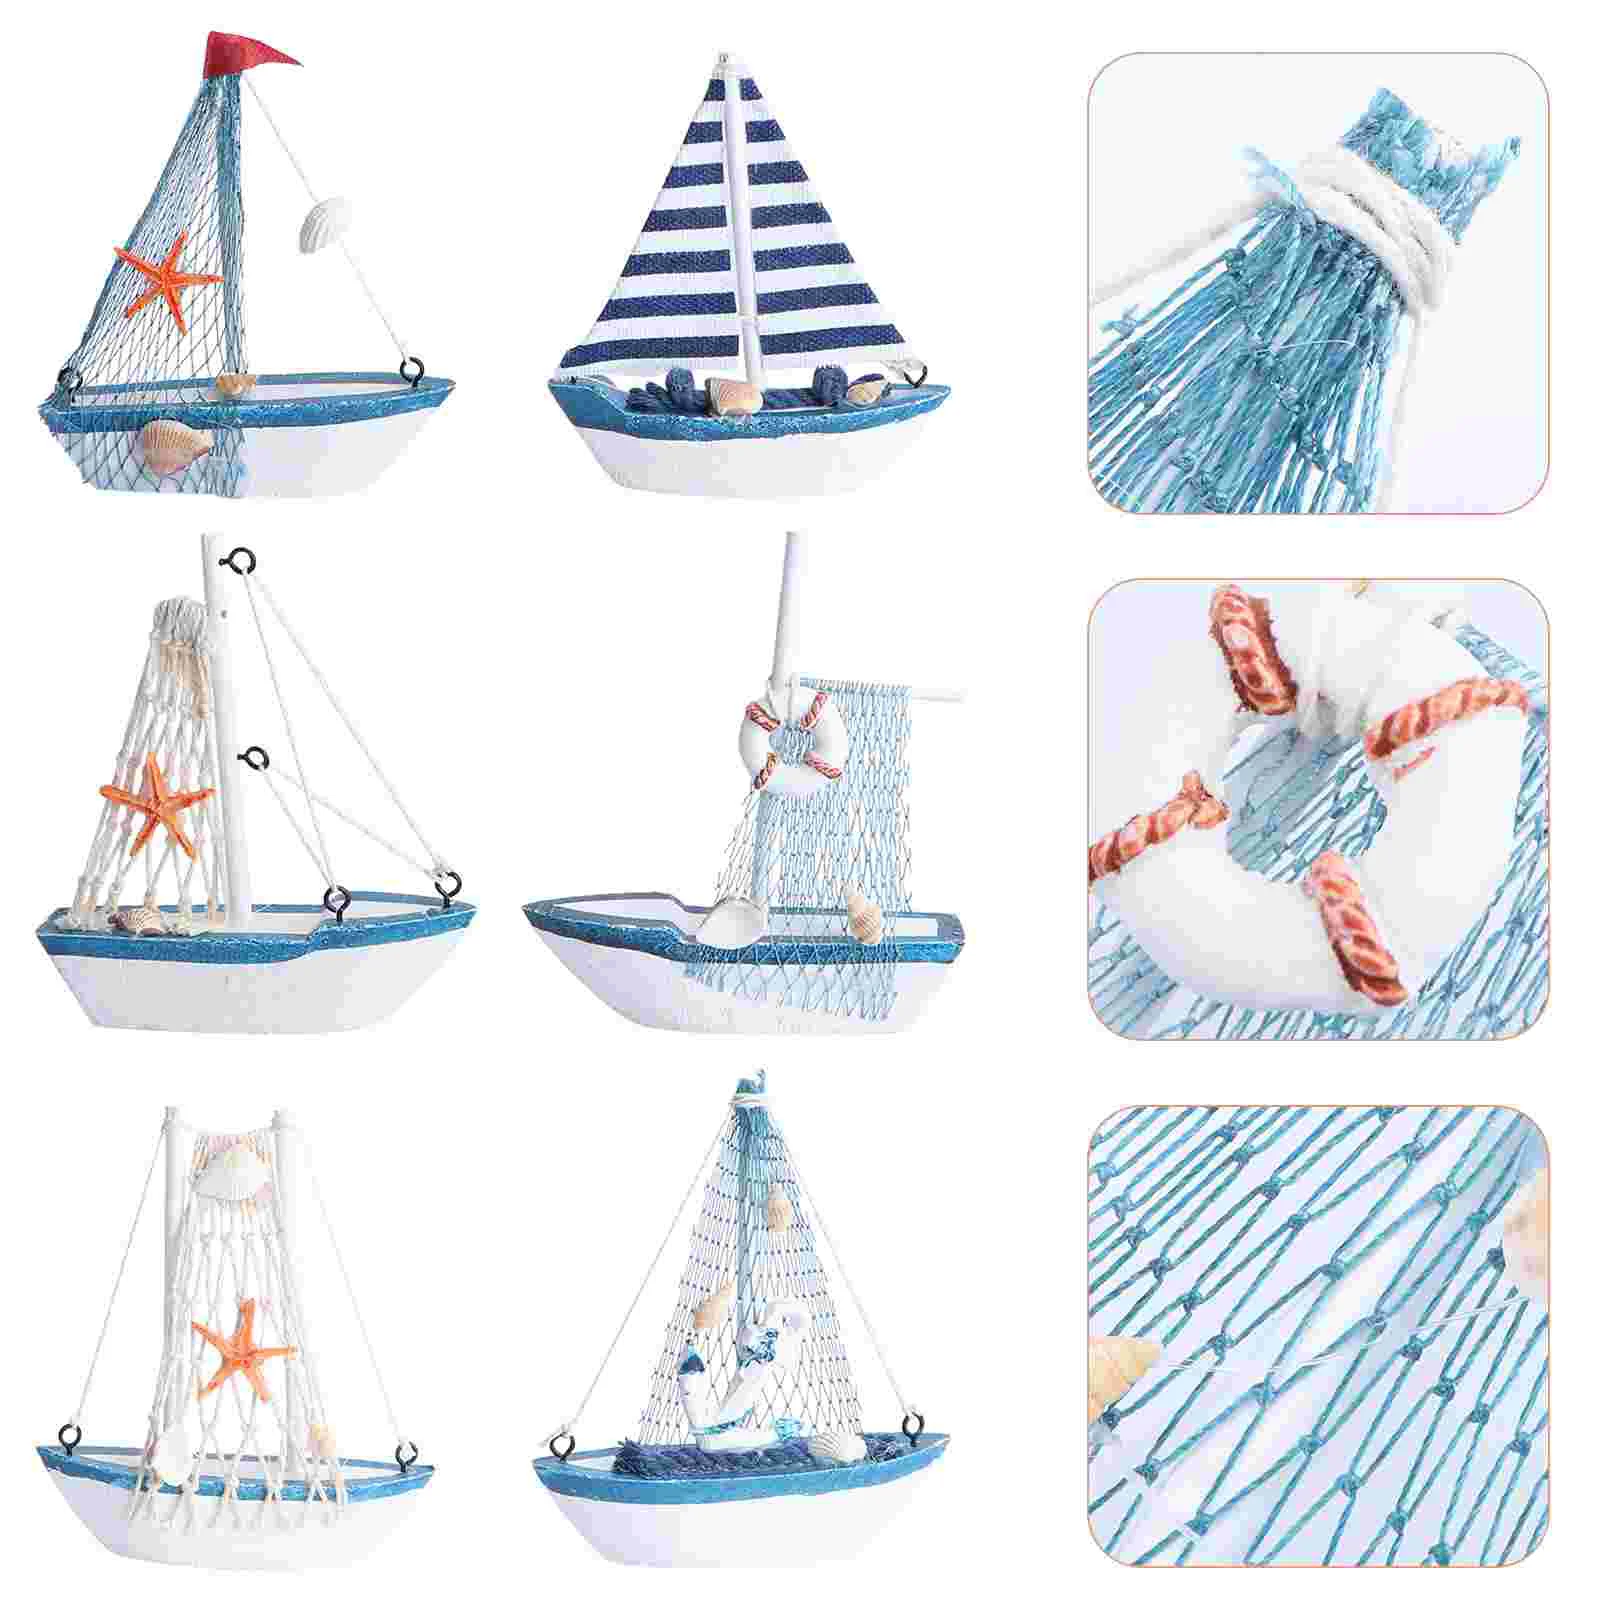 

6 Pcs Boat Model Sailboat Models Mediterranean Style Wooden Ship Desktop Ornament MDF Child